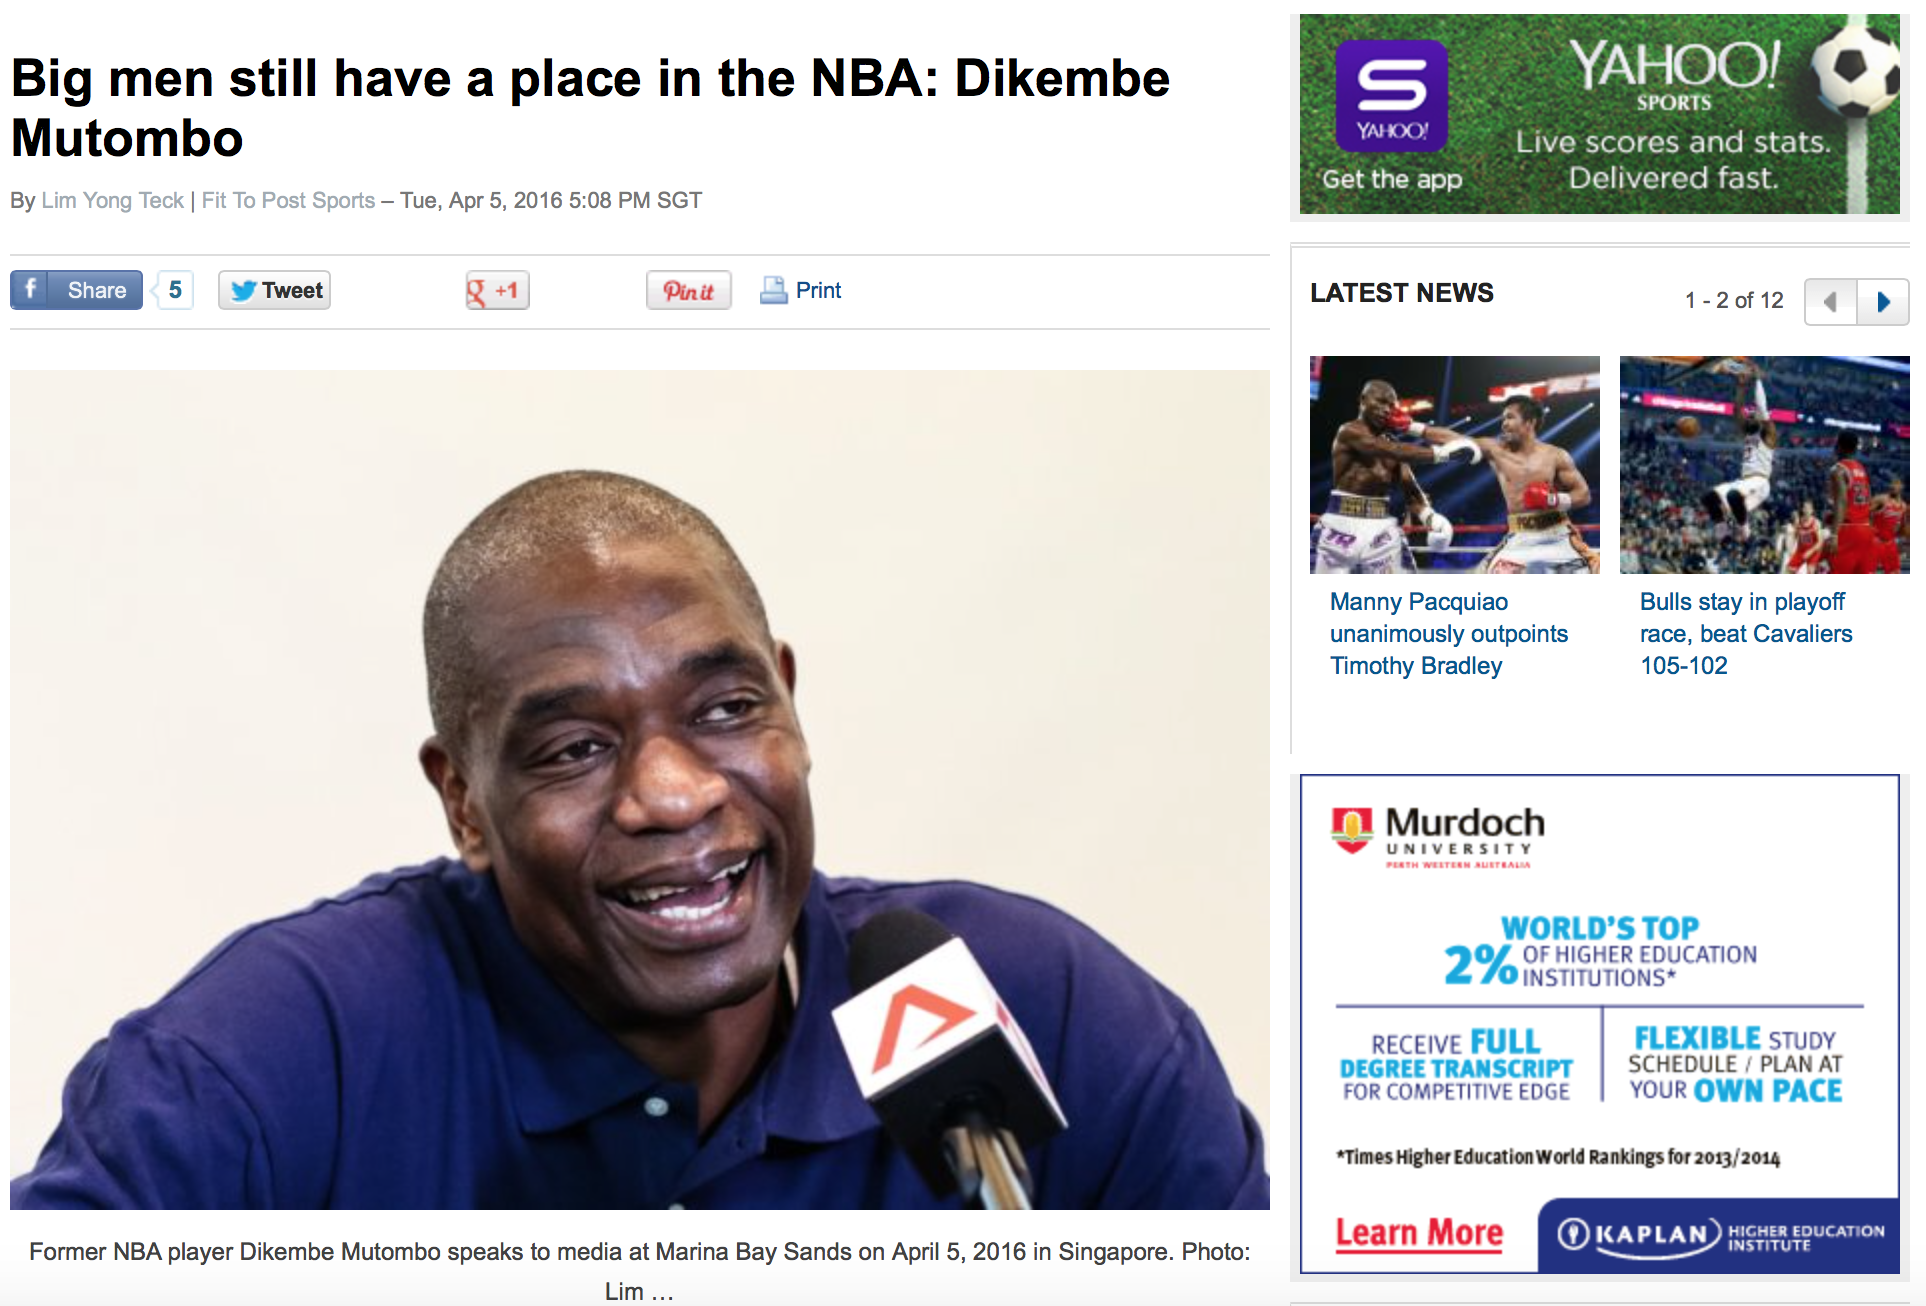  Dikembe Mutombo for Yahoo!&nbsp;(www.yahoo.com) 